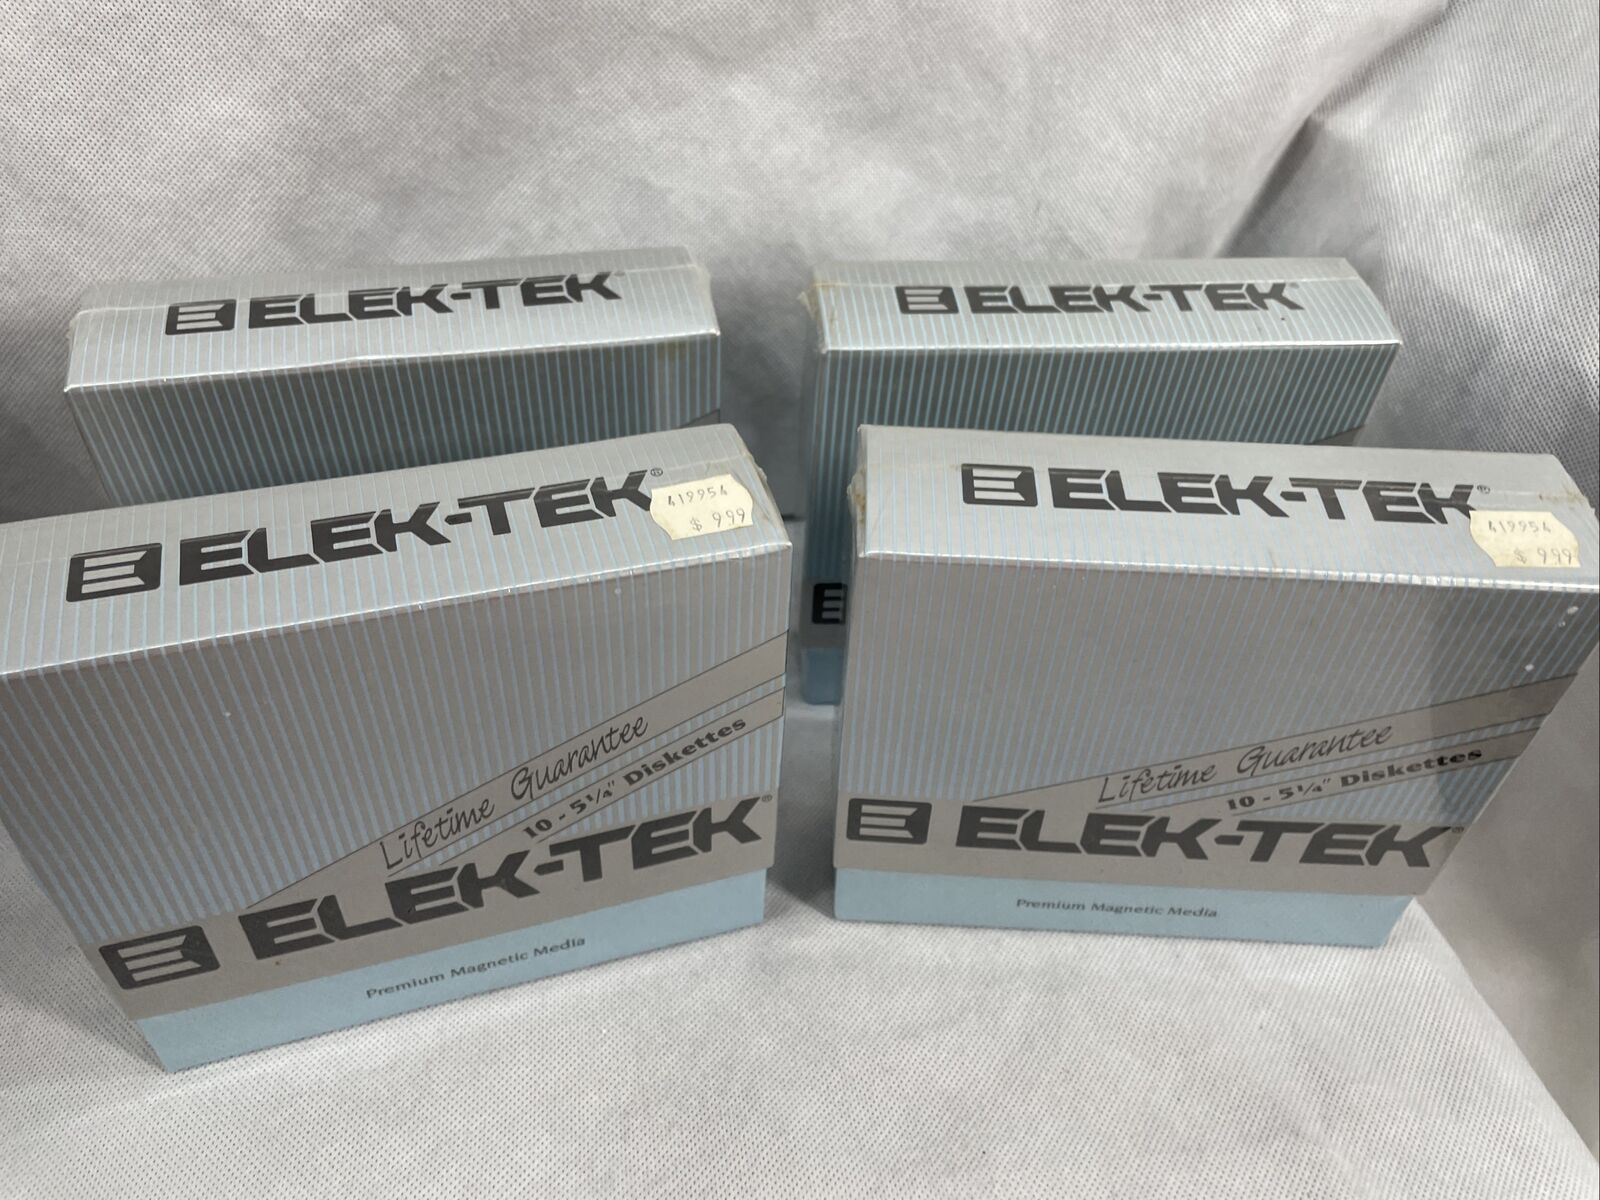 ELEK-TEK 5 1/4 Diskettes Floppy Disks 10 Pack Lot Of  4 New Premium Magnetic 6S5